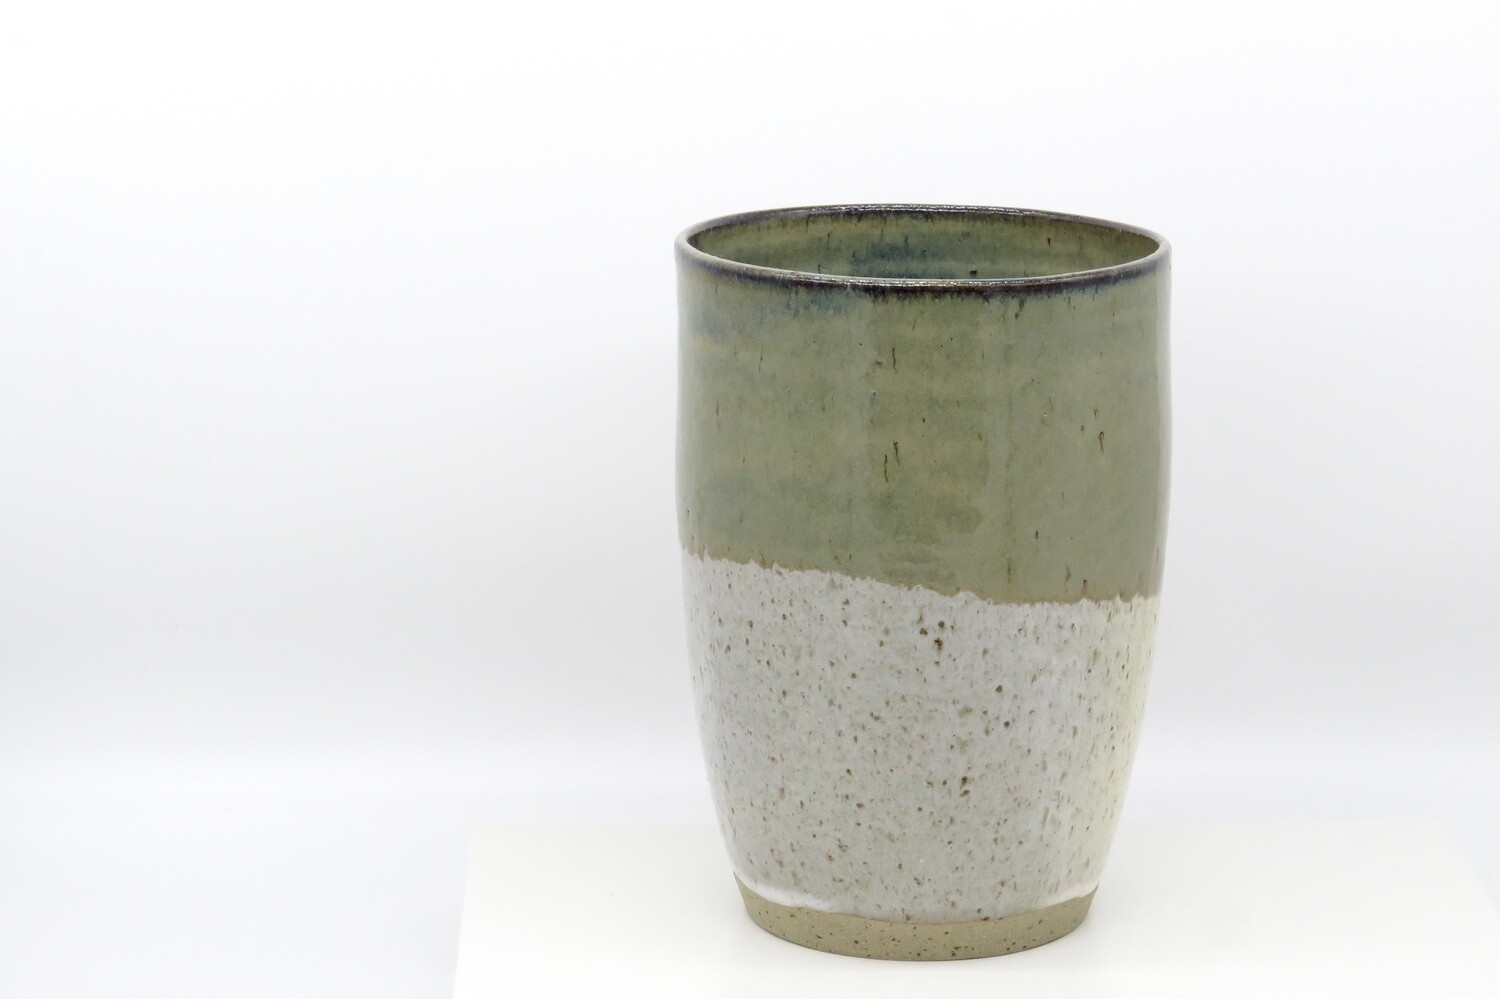 Large Vase - Flecked white and mottled green.